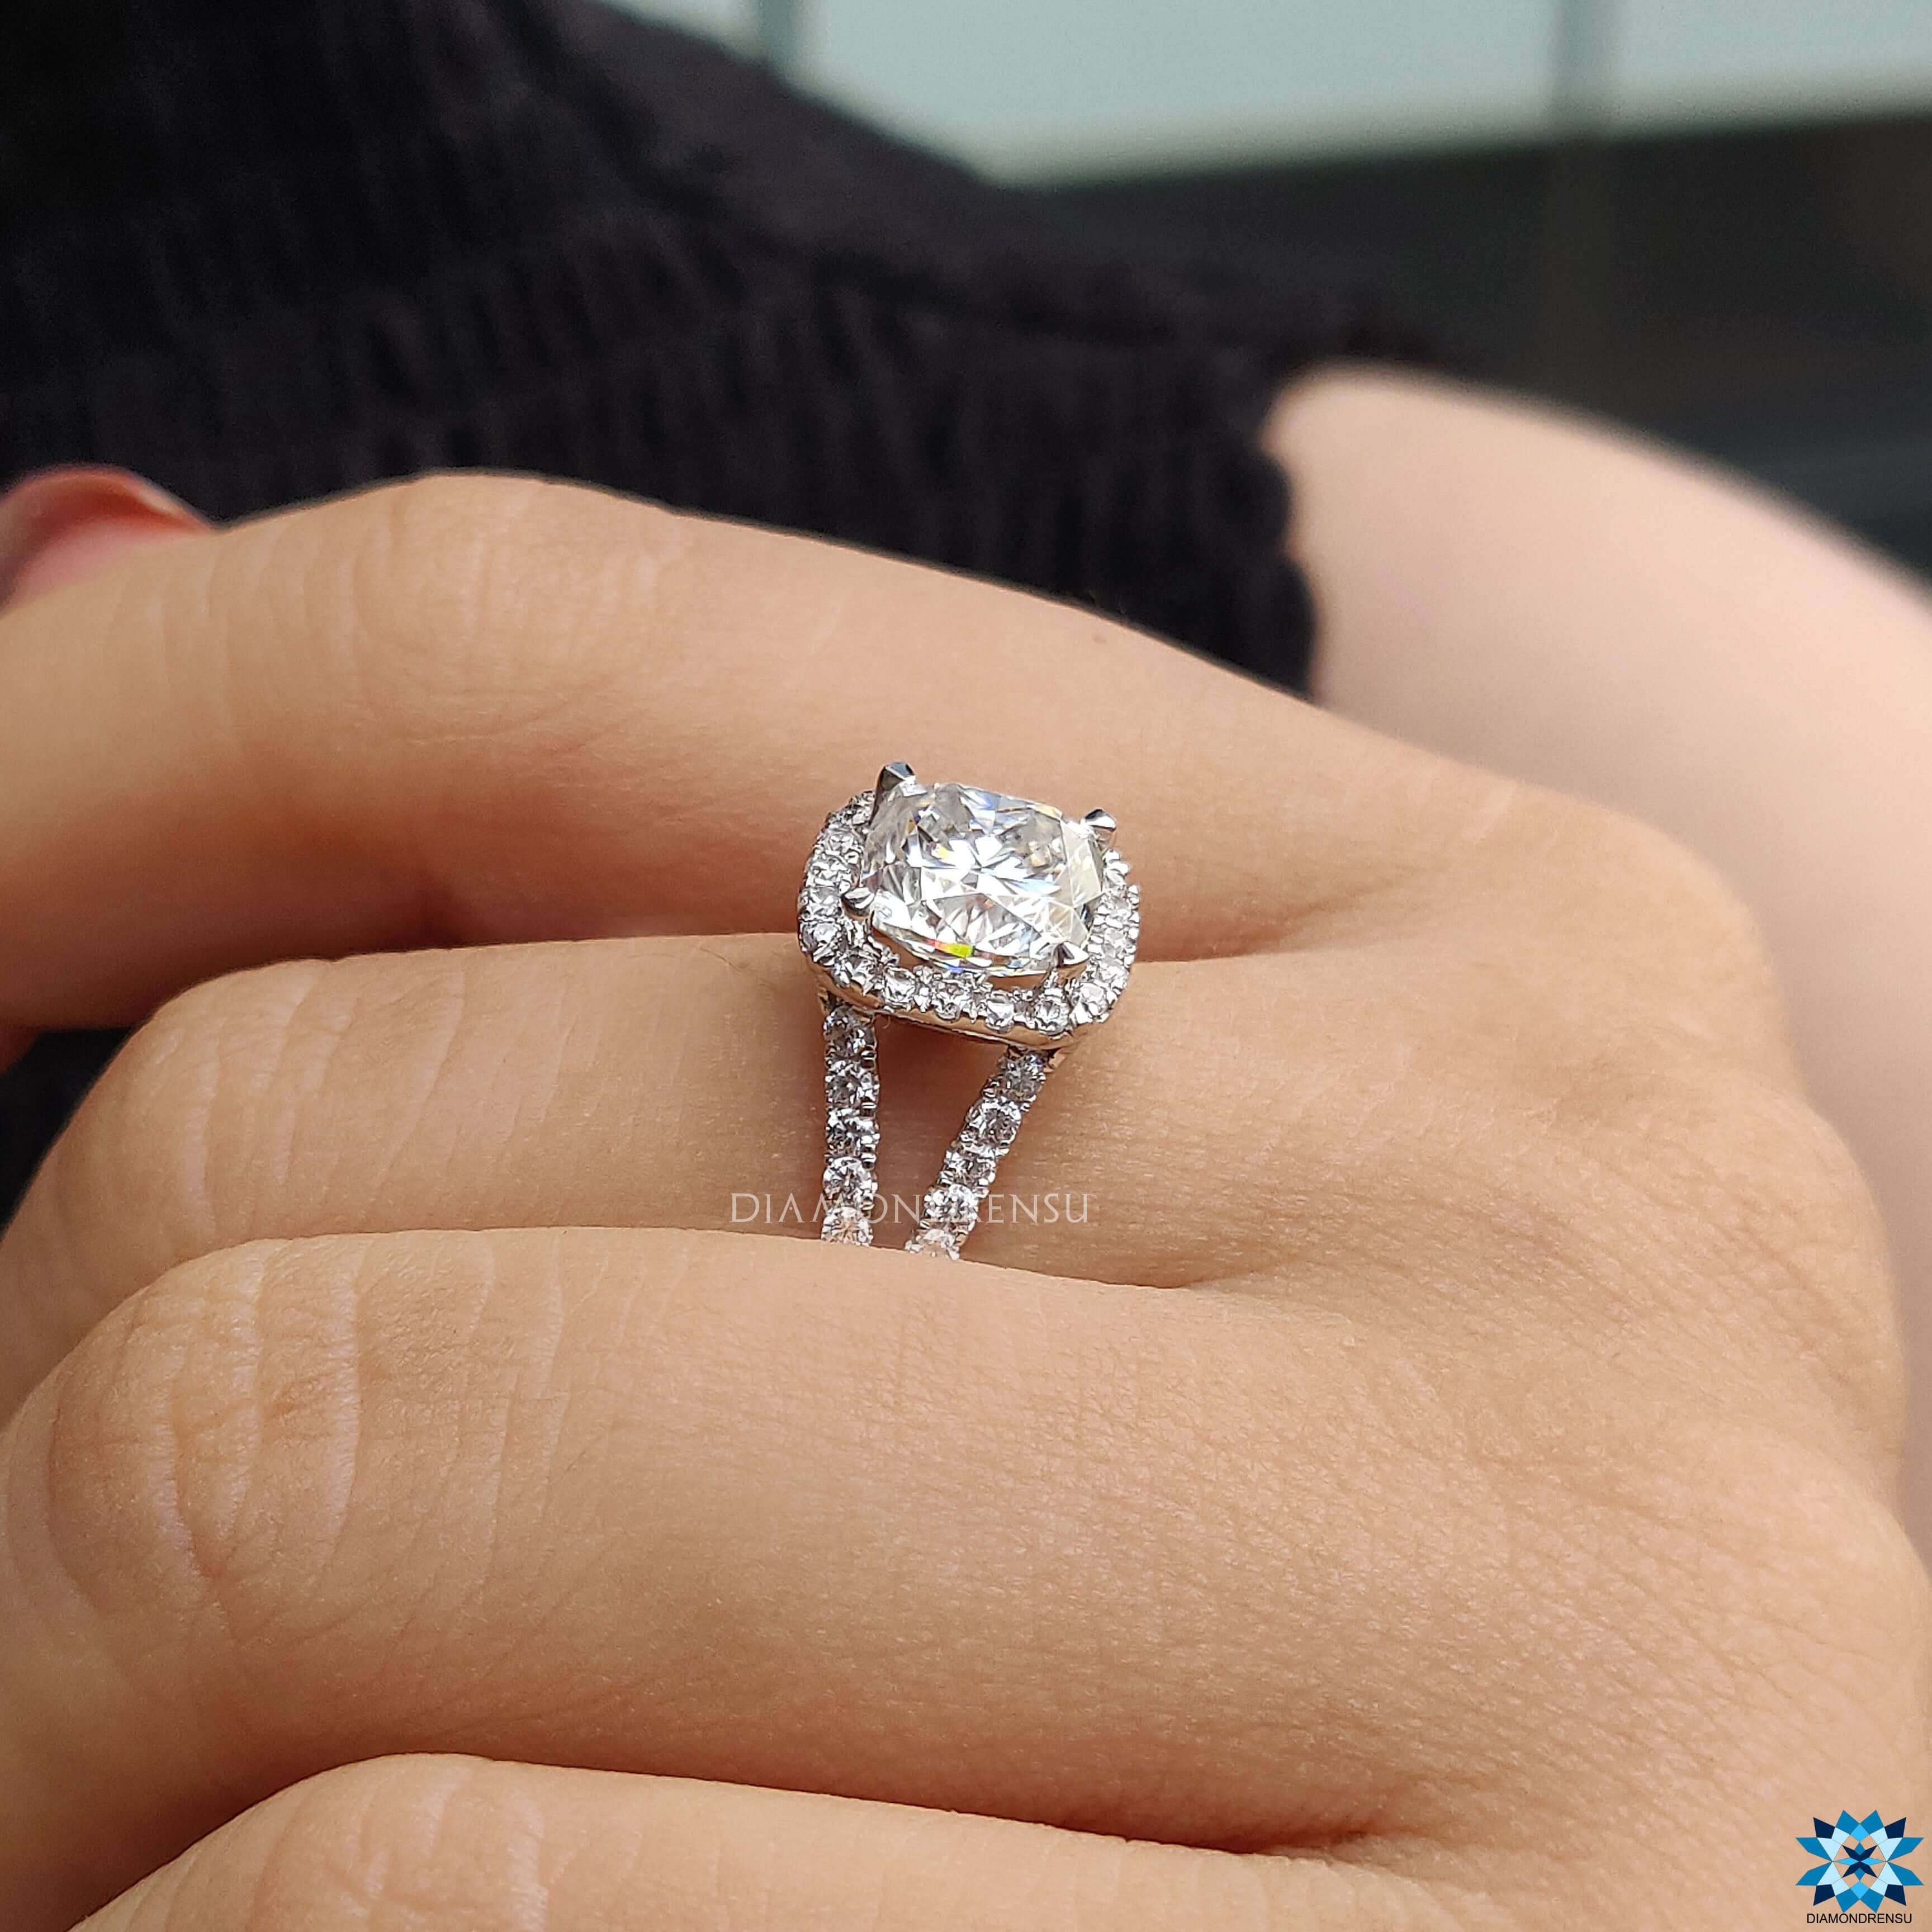 diamondrensu, customzied jewelry, customized ring